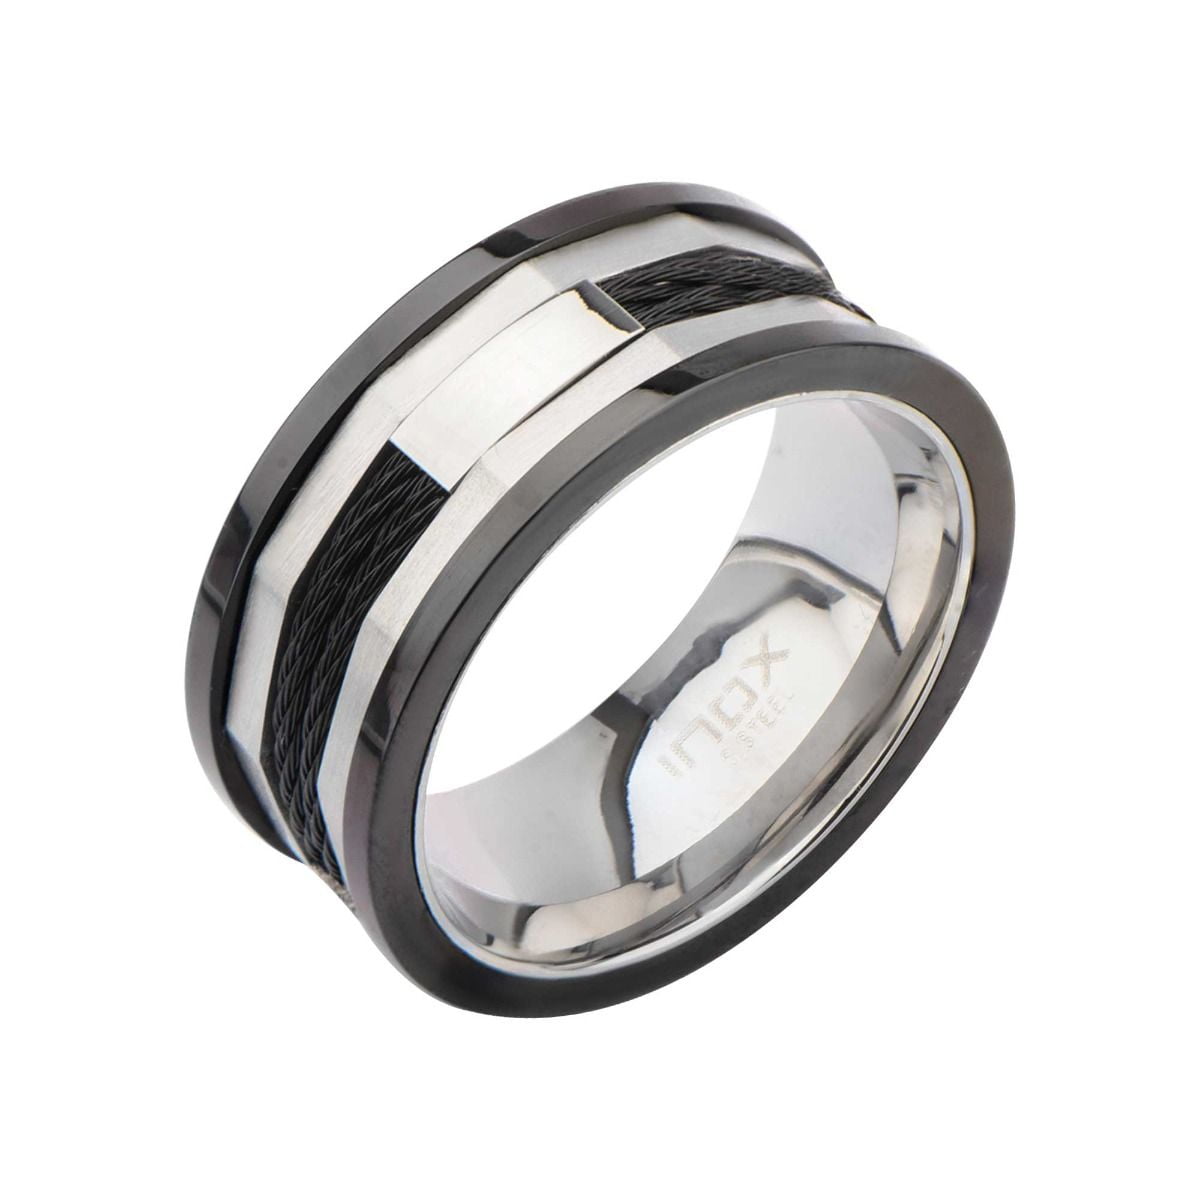 Titanium Men's Hammered Center Stripe Wedding Band Ring Size 9-13 